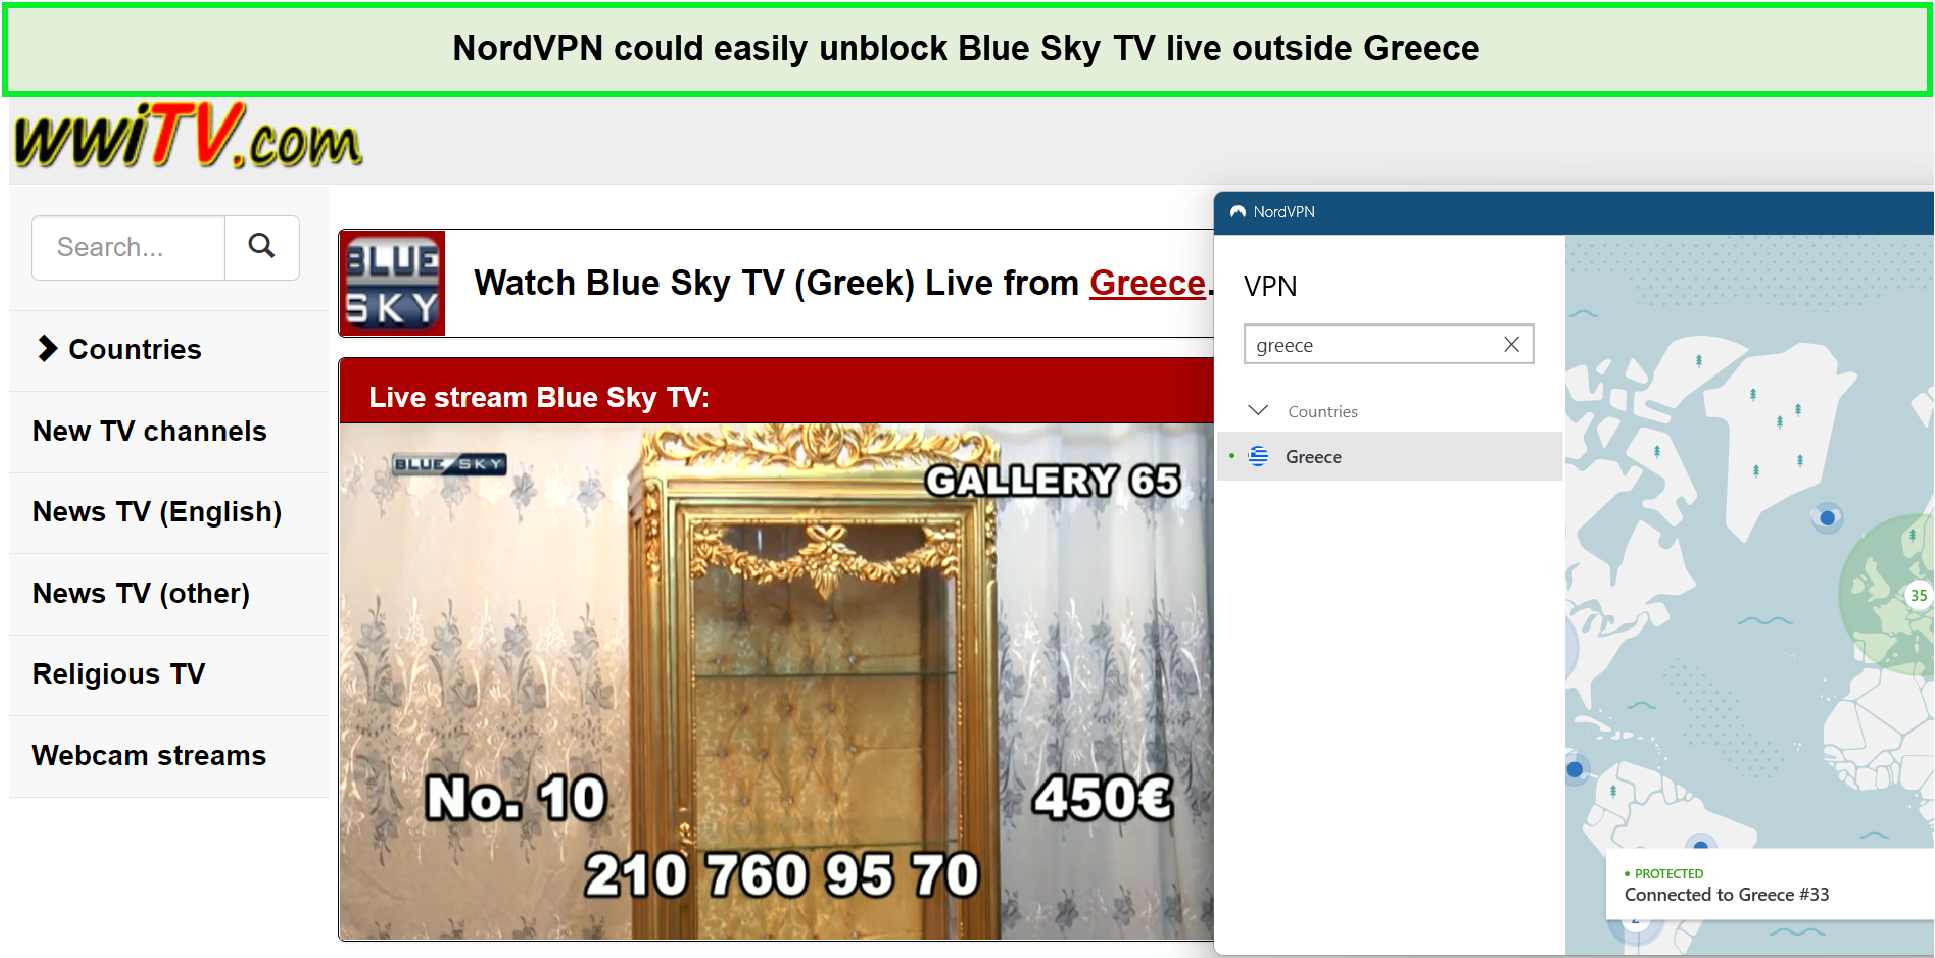 NordVPN-easily-unblock-Bly-Sky-TV-outside-Greece